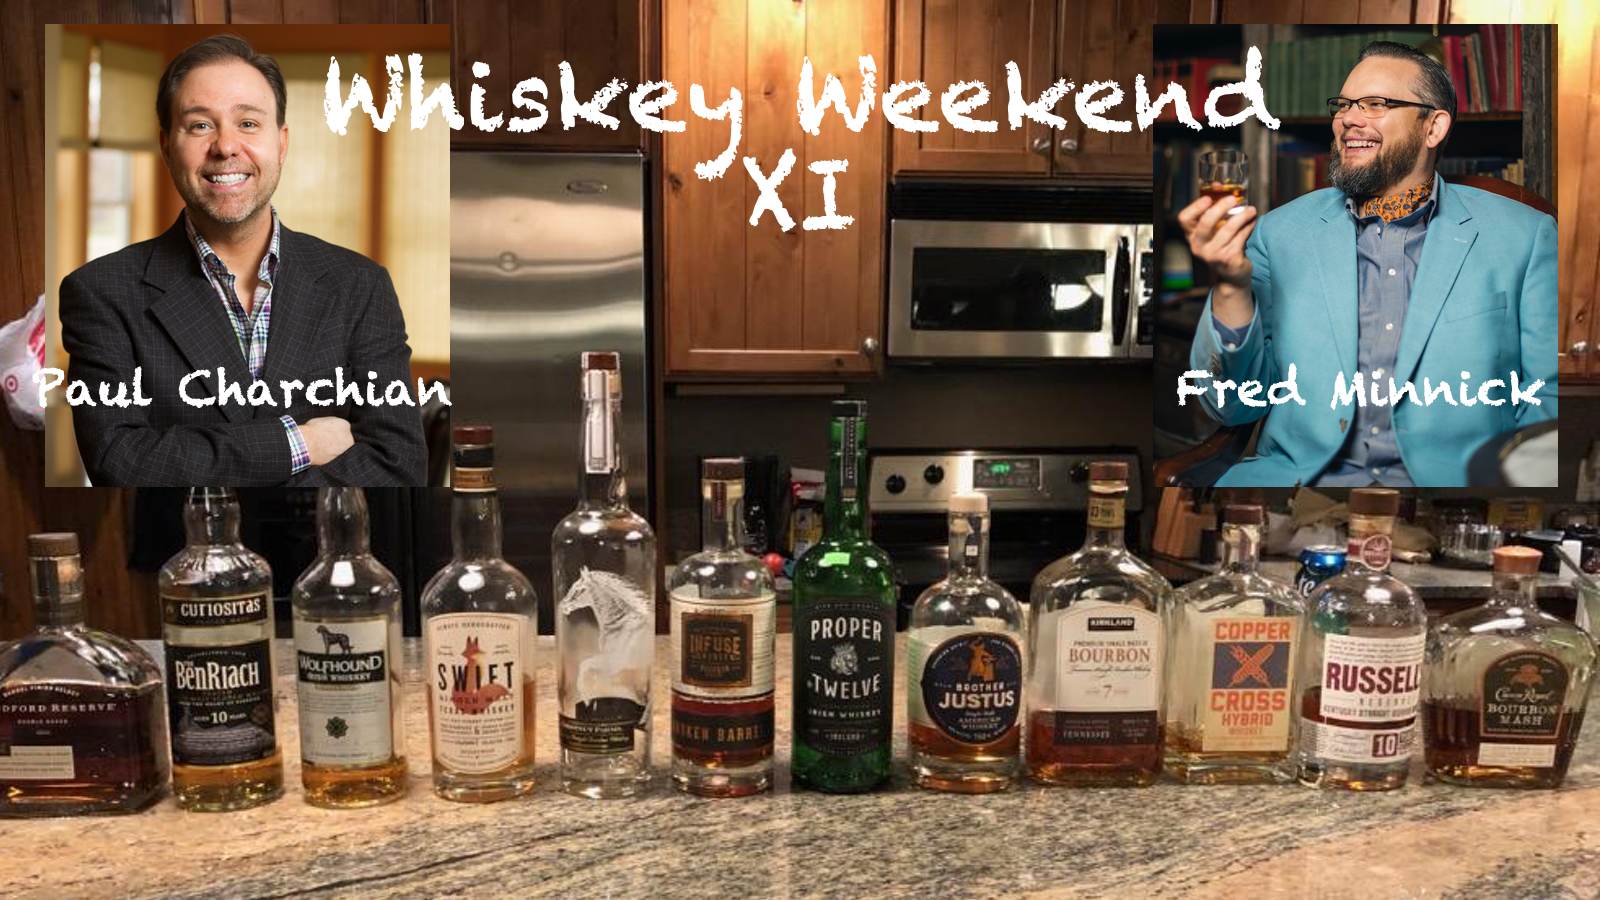 Charch's Whiskey Weekend XI - Recap & Analysis